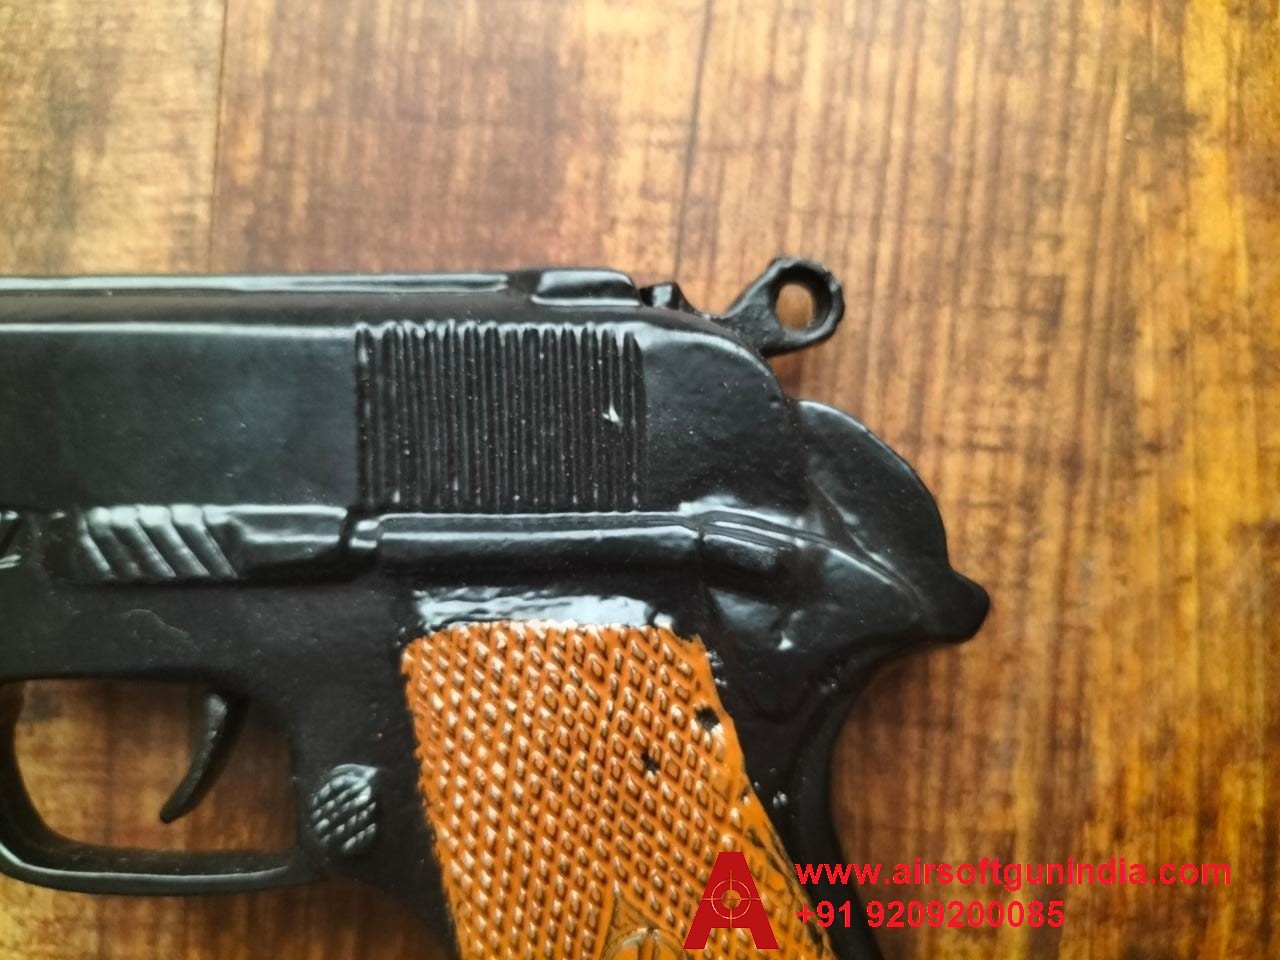 CORK GUN BERETTA STYLE BROWN  BY AIRSOFT GUN INDIA ( SOUND GUN ) FOR CROP PROTECTION